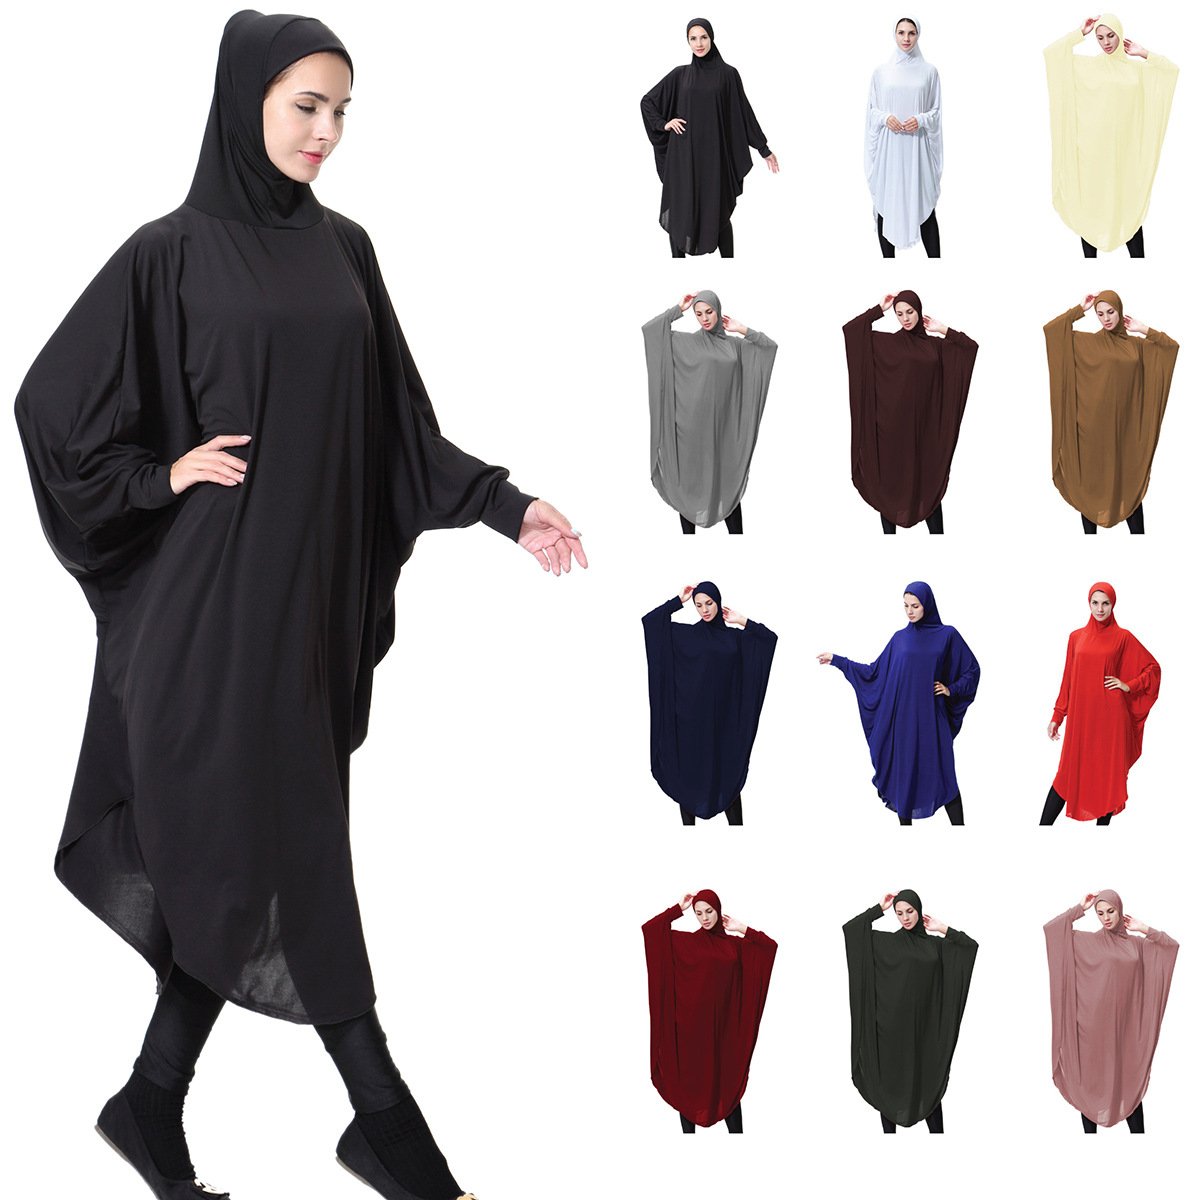 Colorful Muslim Women’s Polyester Burka